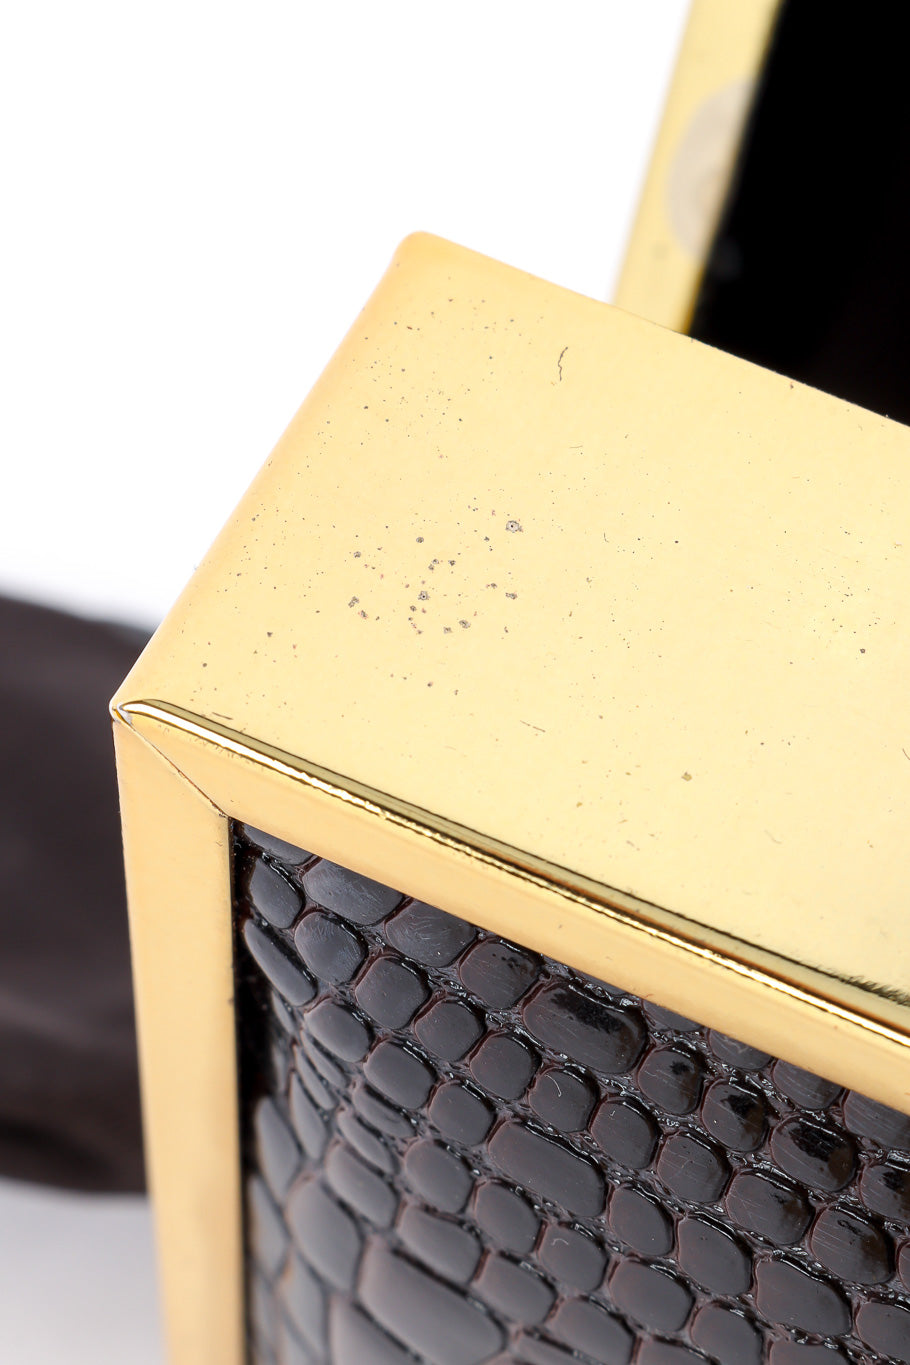 Lou Taylor gold frame box purse scuffs on gold frame details @recessla